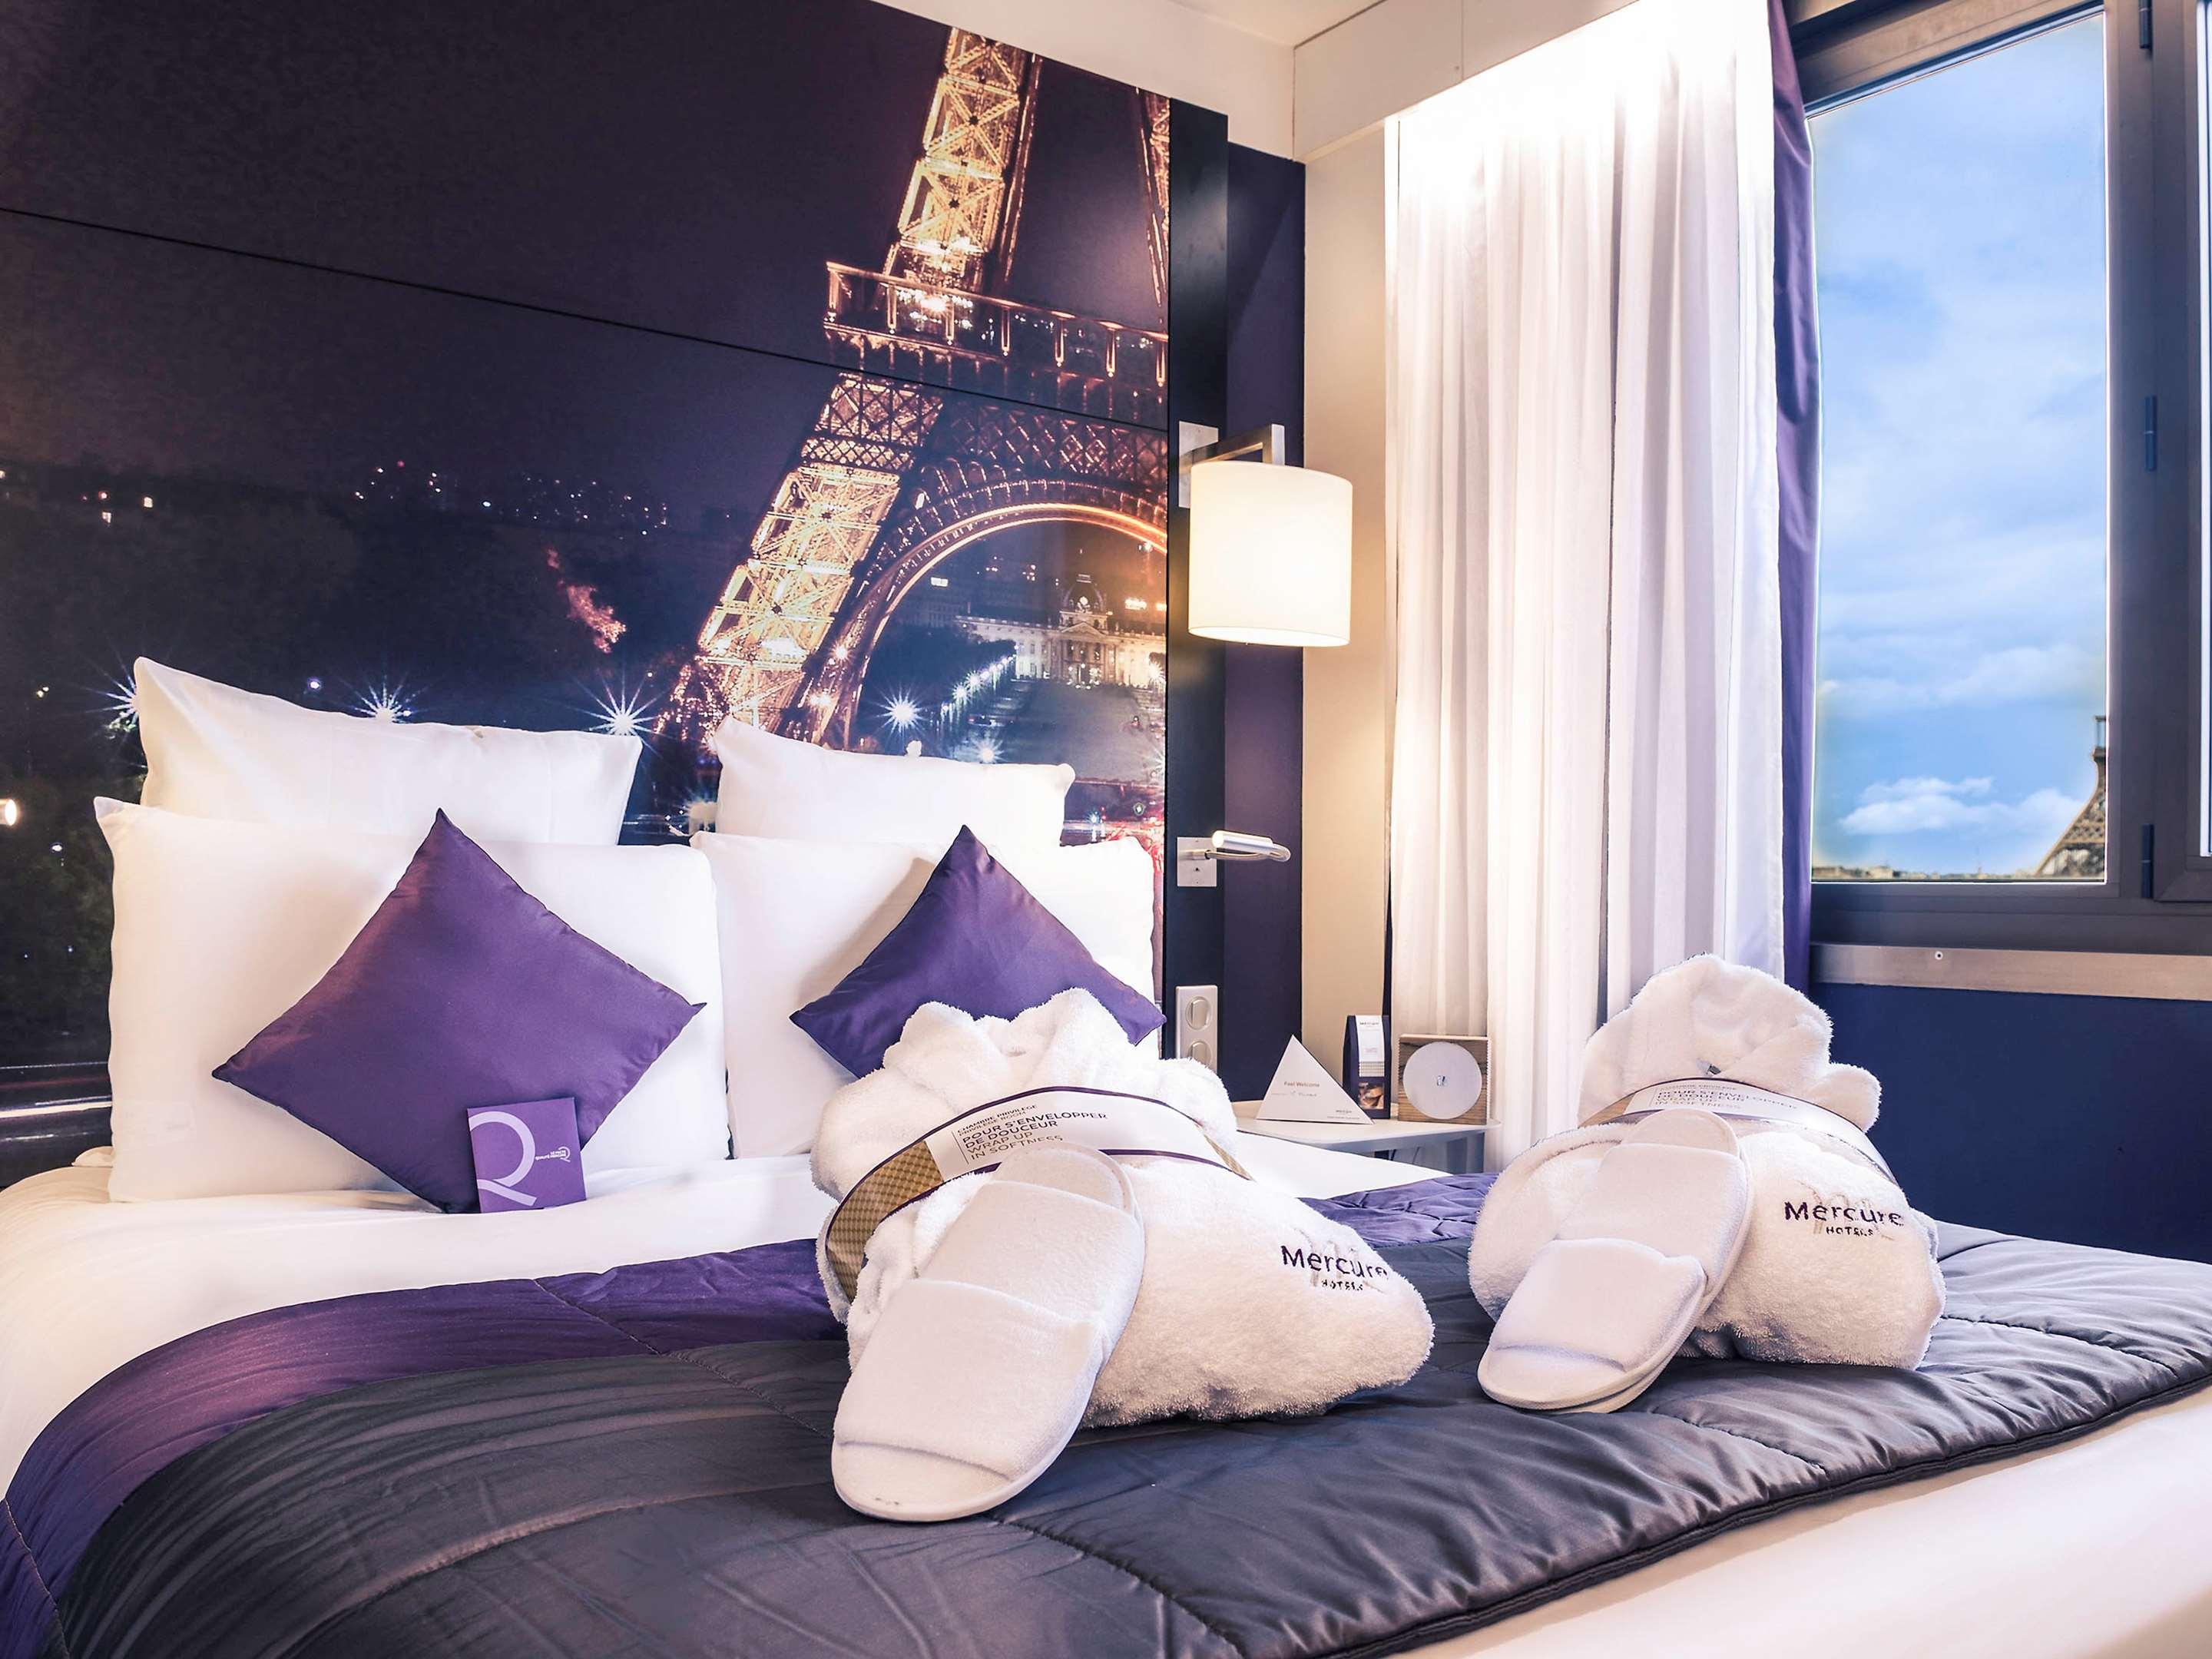 Cheap hotels in Paris 2023